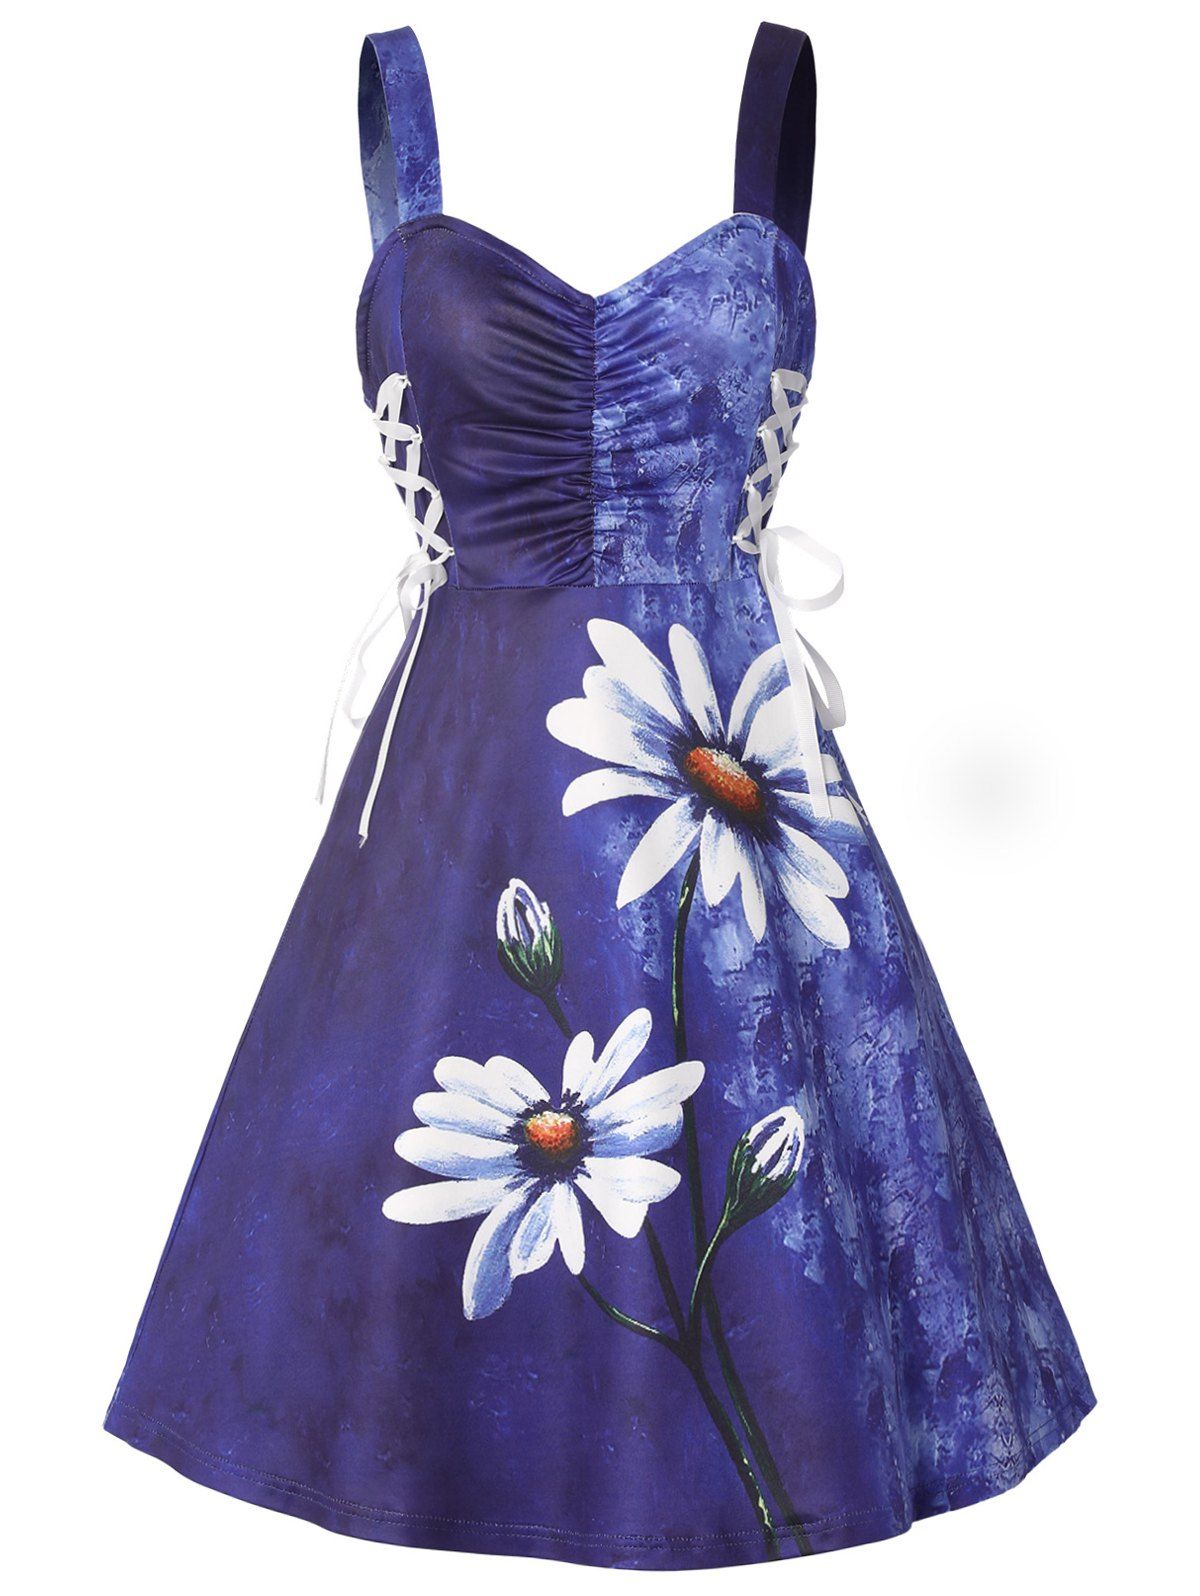 Flower Print Lace Up Tie Dye Ruched Mini Dress - LIGHT BLUE XXL